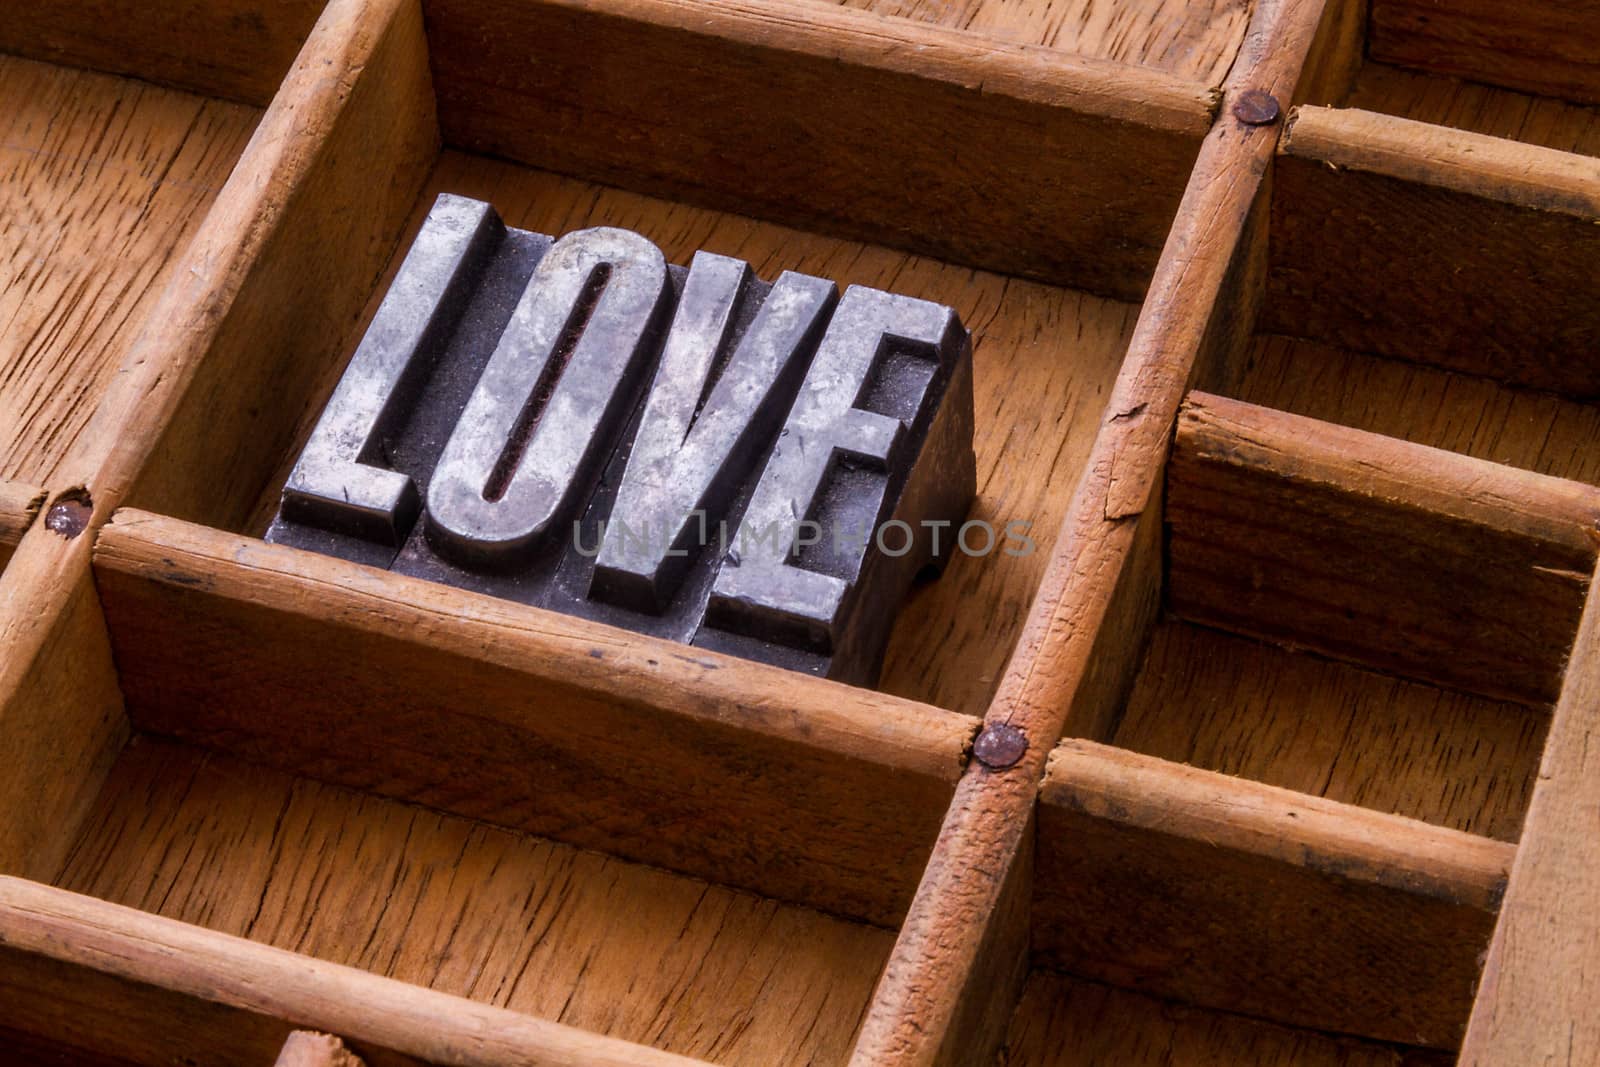 Typesetter drawer: 'LOVE' by ricardvaque